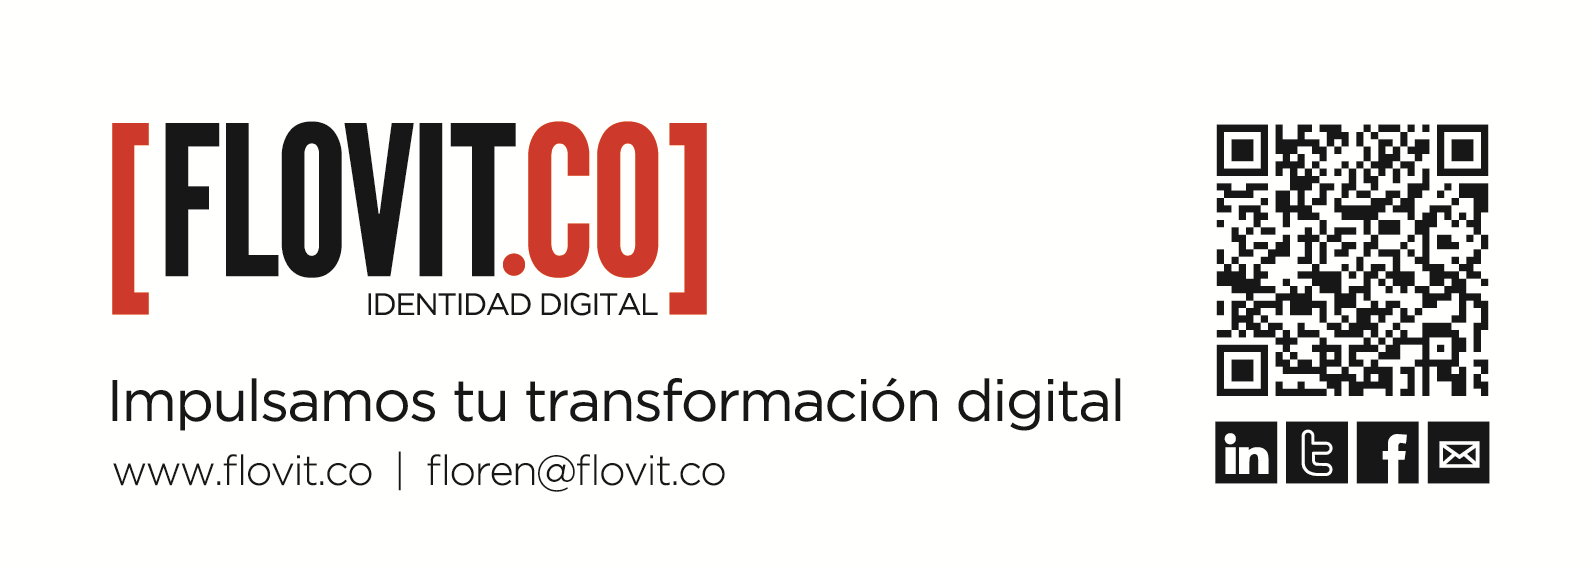 Flovit.co Identidad Digital | Impulsamos tu transformación digital